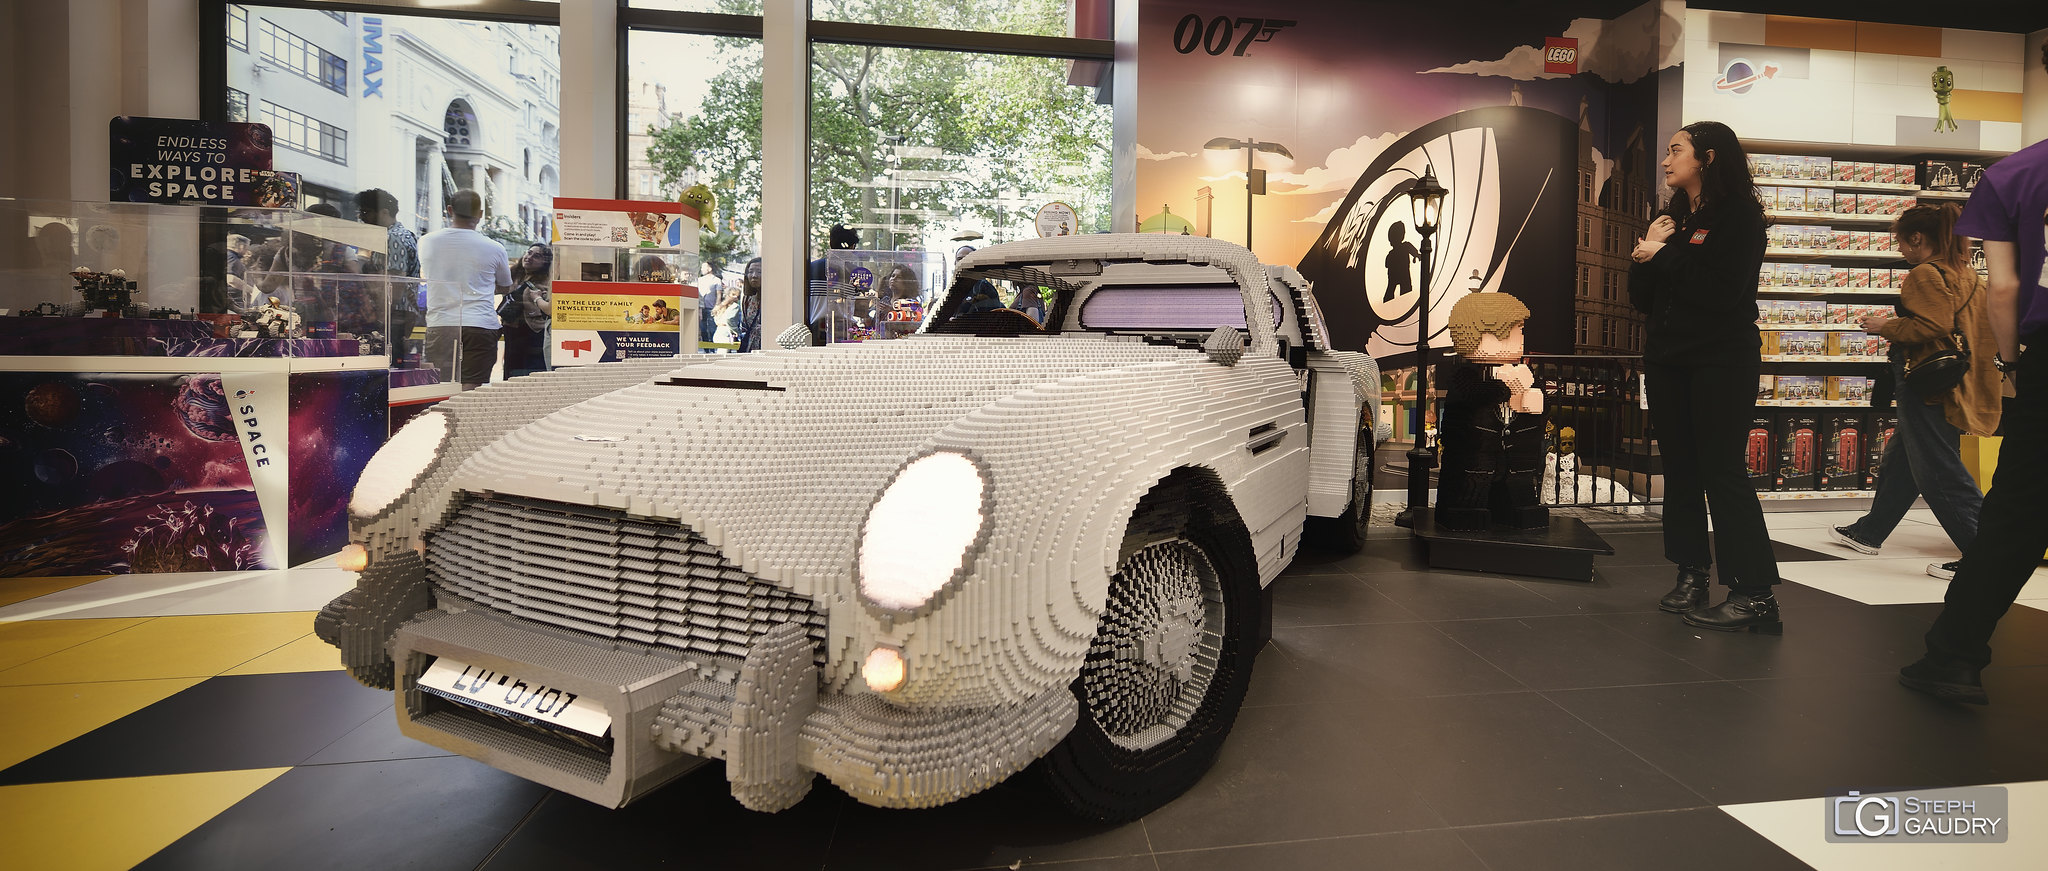 L'Aston Martin DB5 de James Bond en Lego taille réelle [Klik om de diavoorstelling te starten]